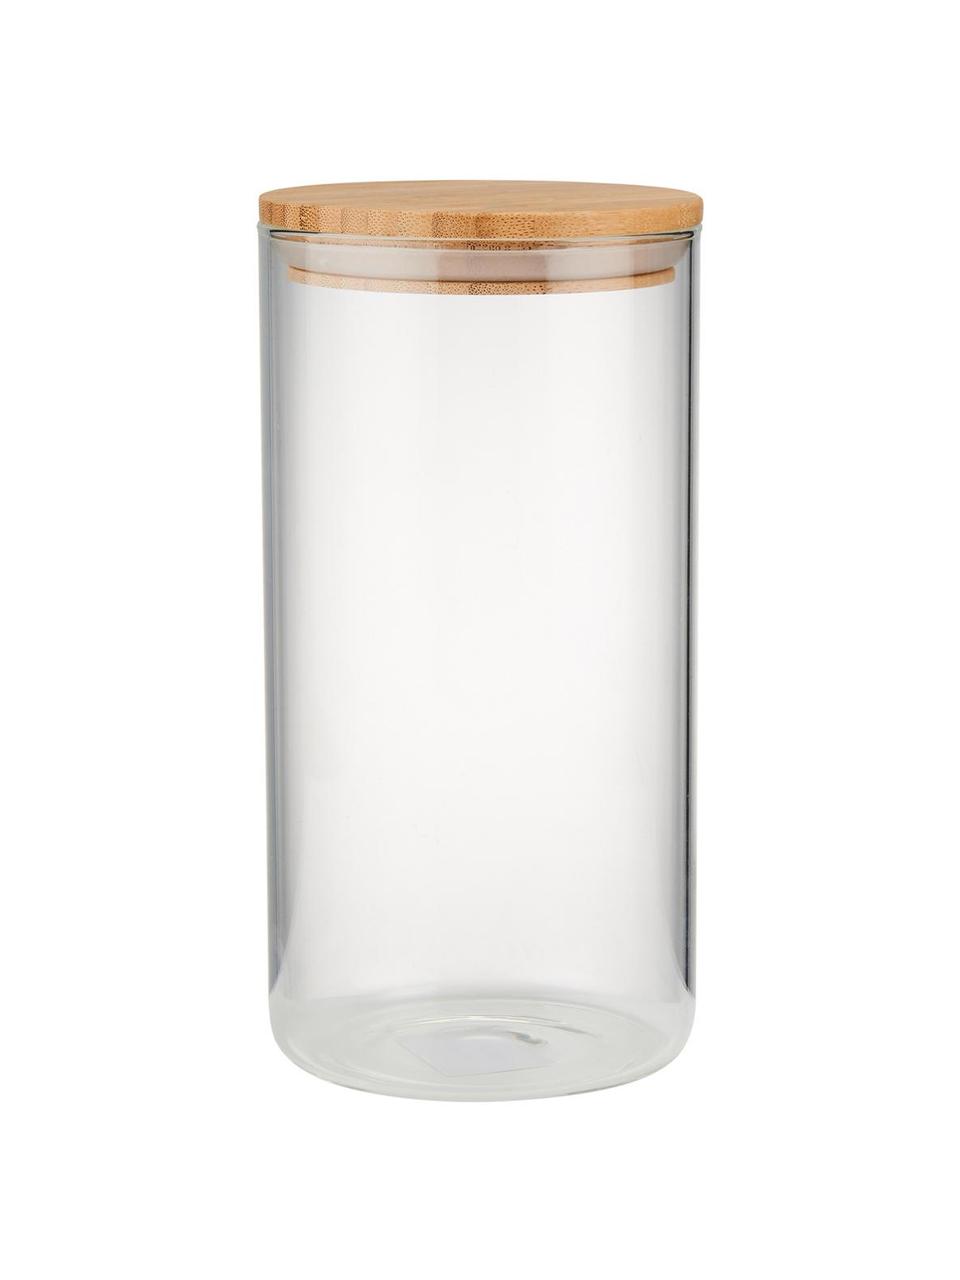 Aufbewahrungsdose Woodlock mit Deckel aus Buchenholz, Dose: Glas, Deckel: Buchenholz, Transparent, Buchenholz, Ø 11 x H 28 cm, 2.3 L